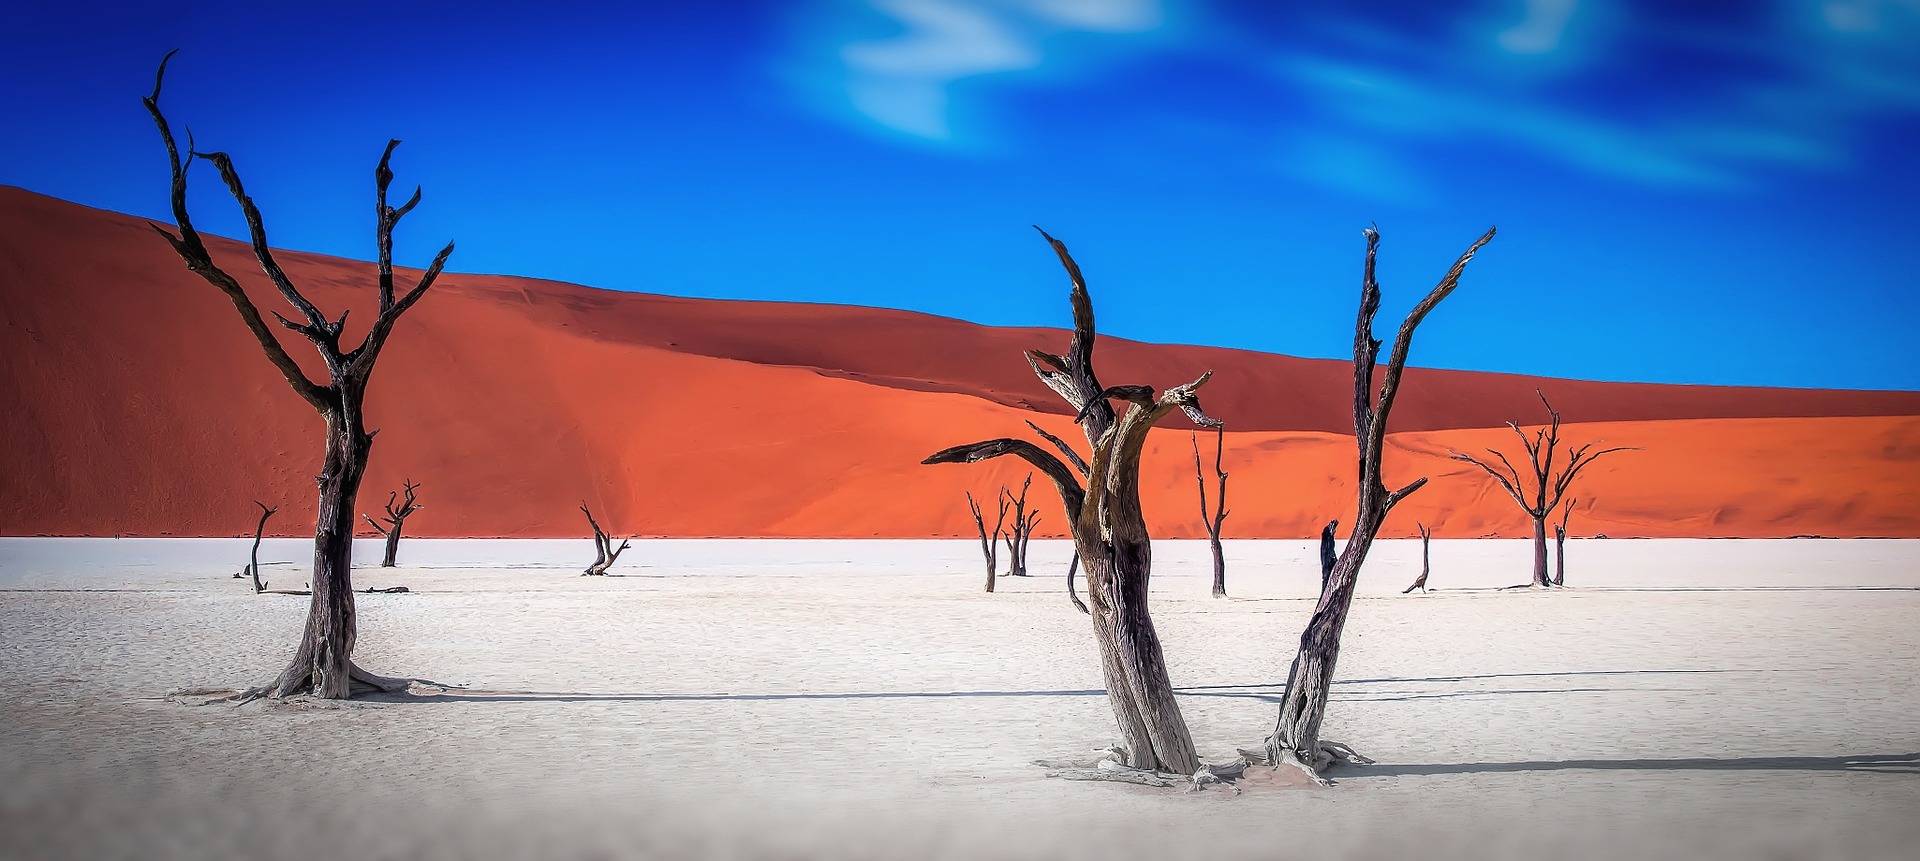 Dedvlei Namibia deserto